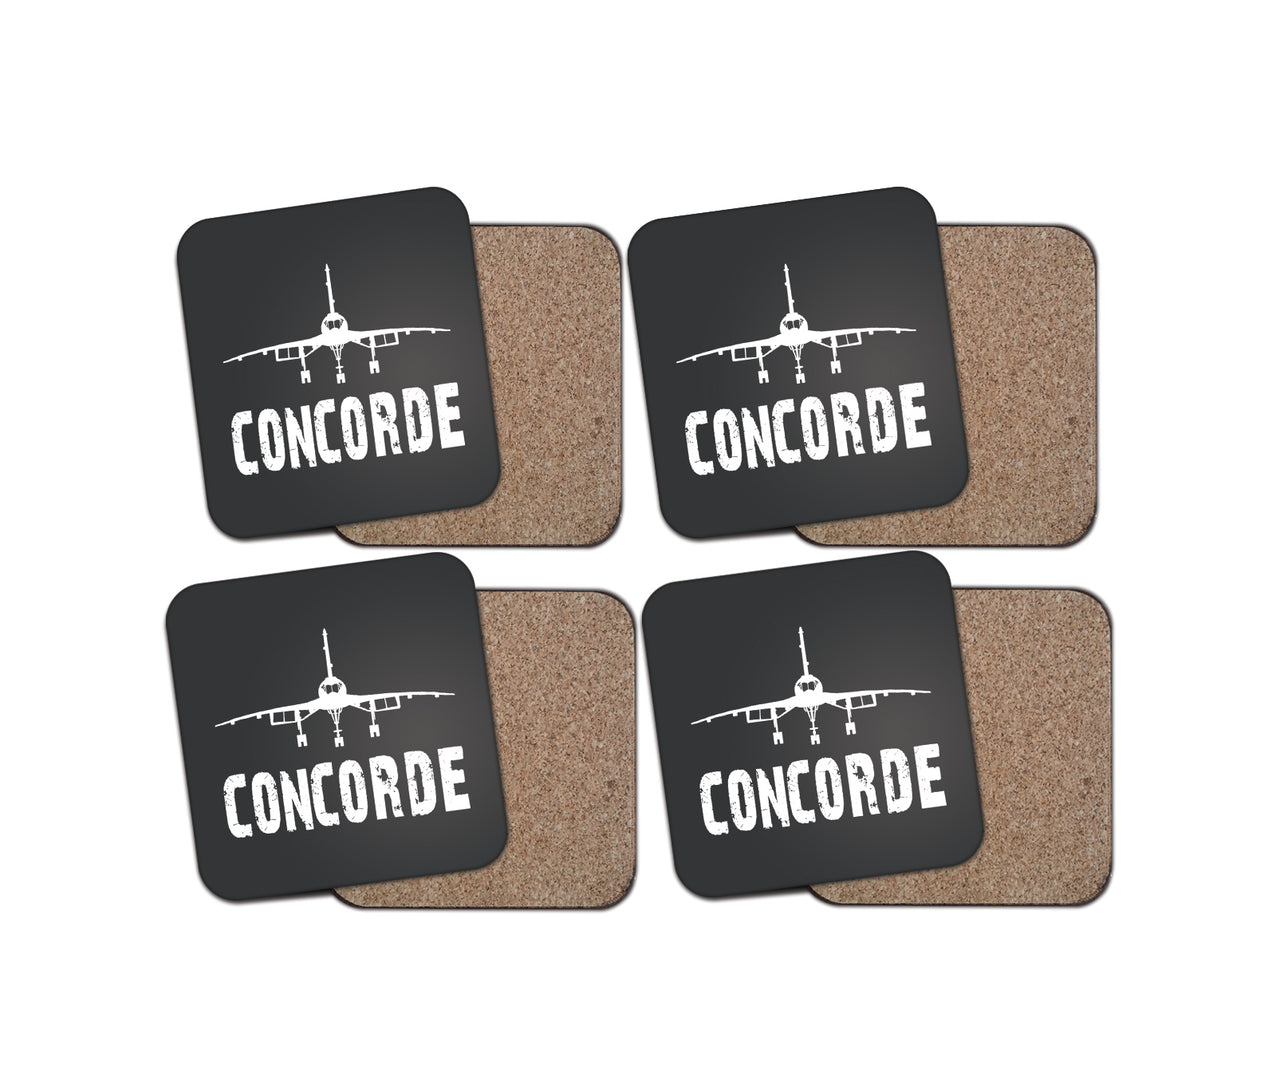 Concorde & Plane Designed Coasters